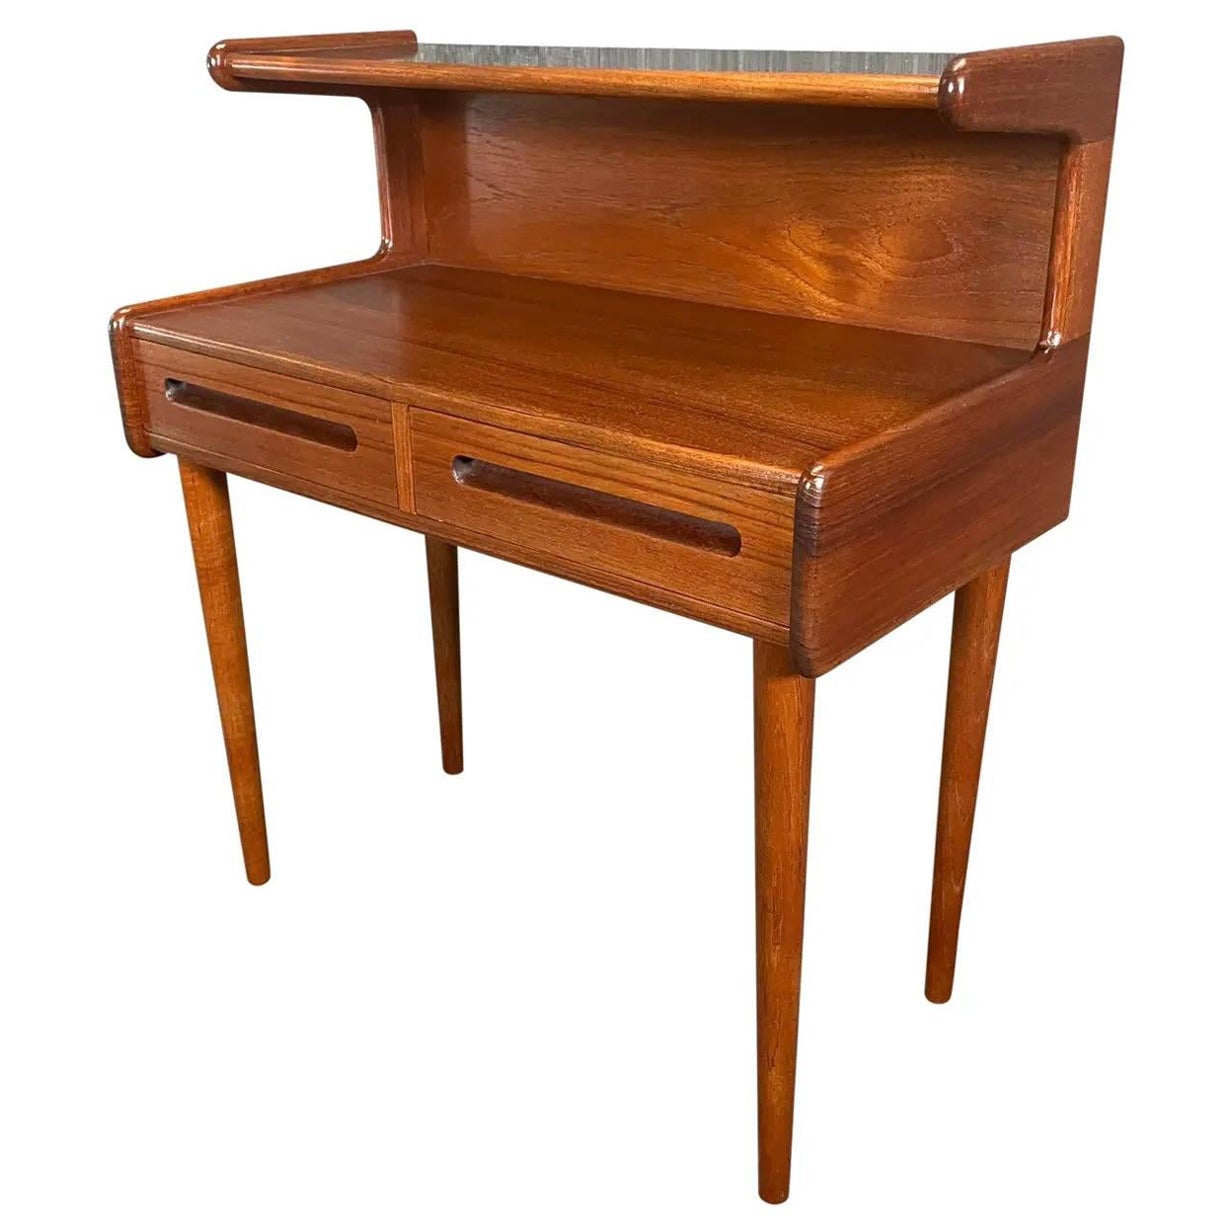 Vintage Danish Mid Century Modern Teak Side Table - Entry Chest For Sale